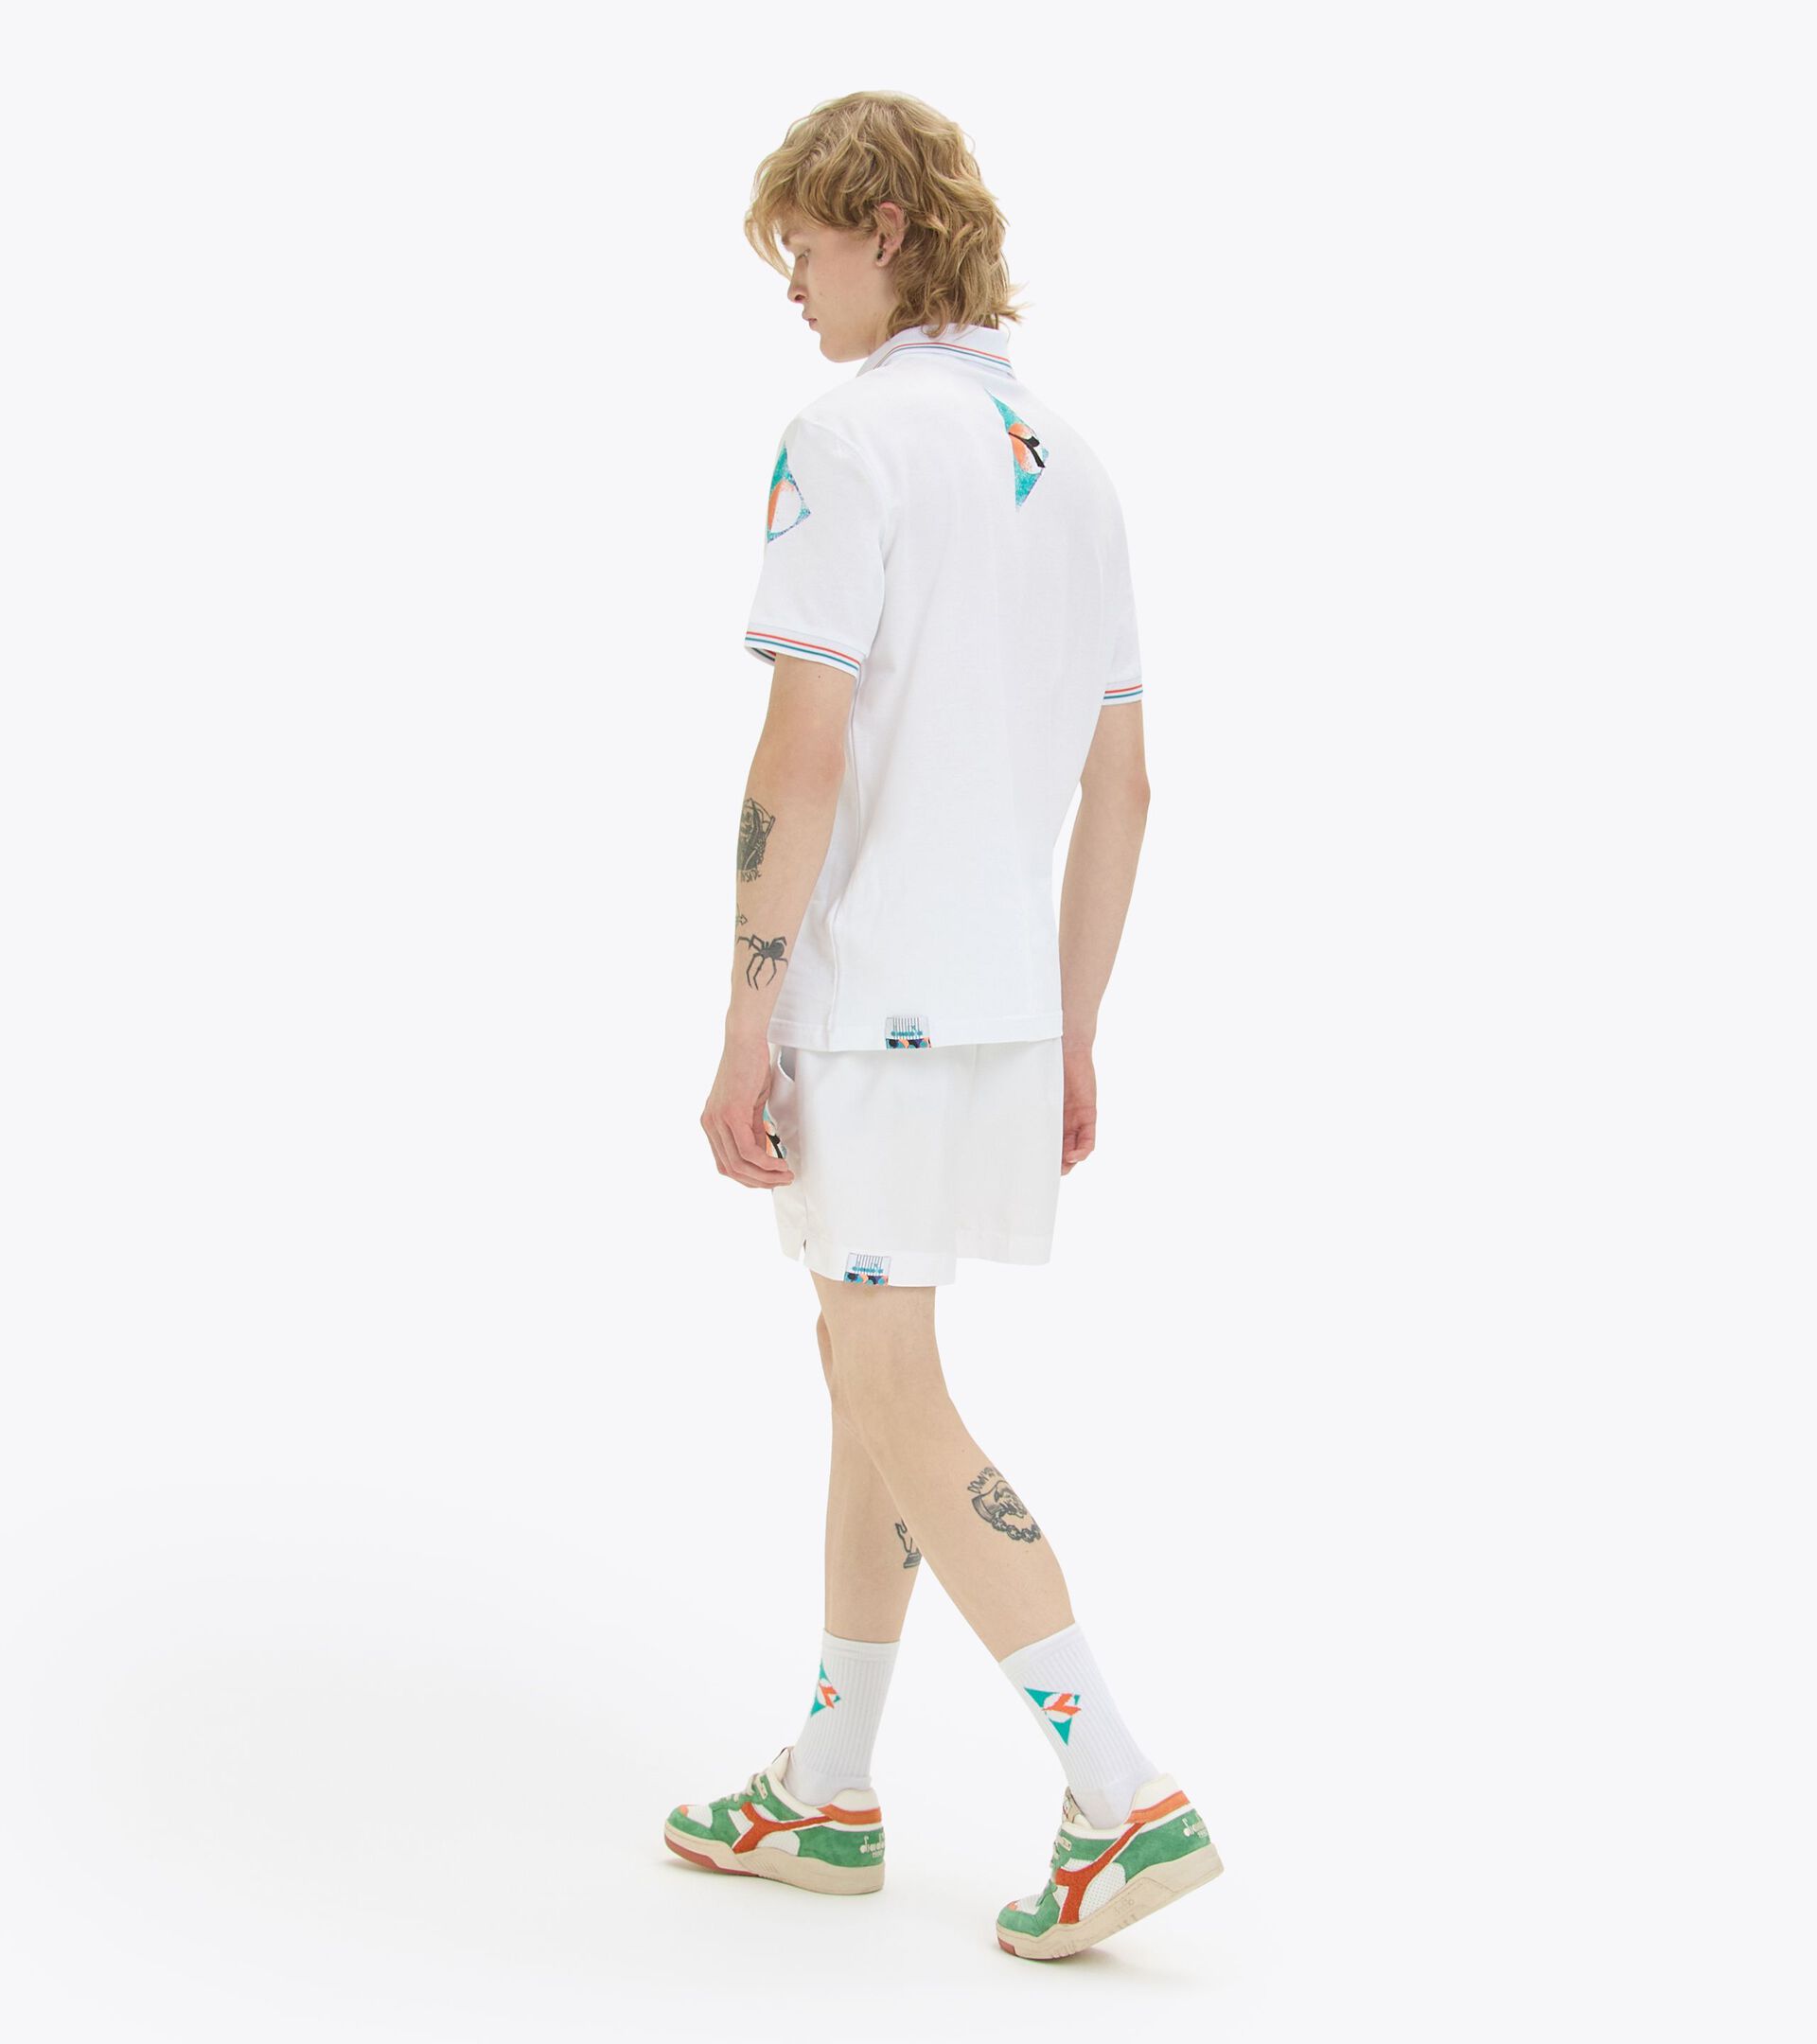 90s-inspired shorts - Made in Italy - Men’s SHORTS TENNIS 90 OPTICAL WHITE - Diadora